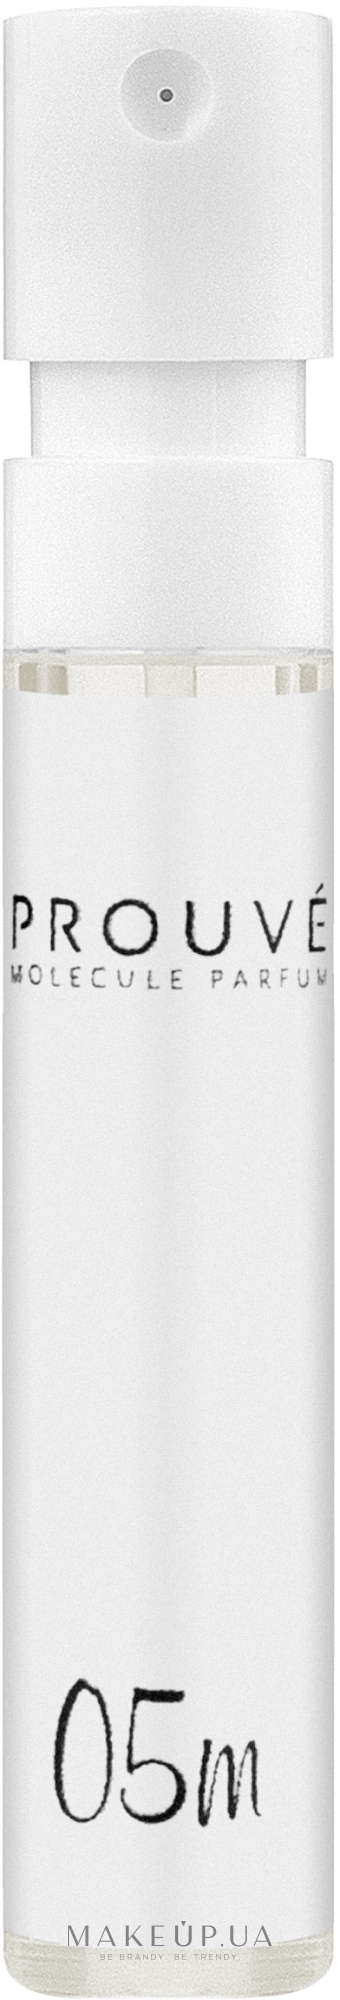 Prouve Molecule Parfum №05m - Духи (пробник) — фото 2ml